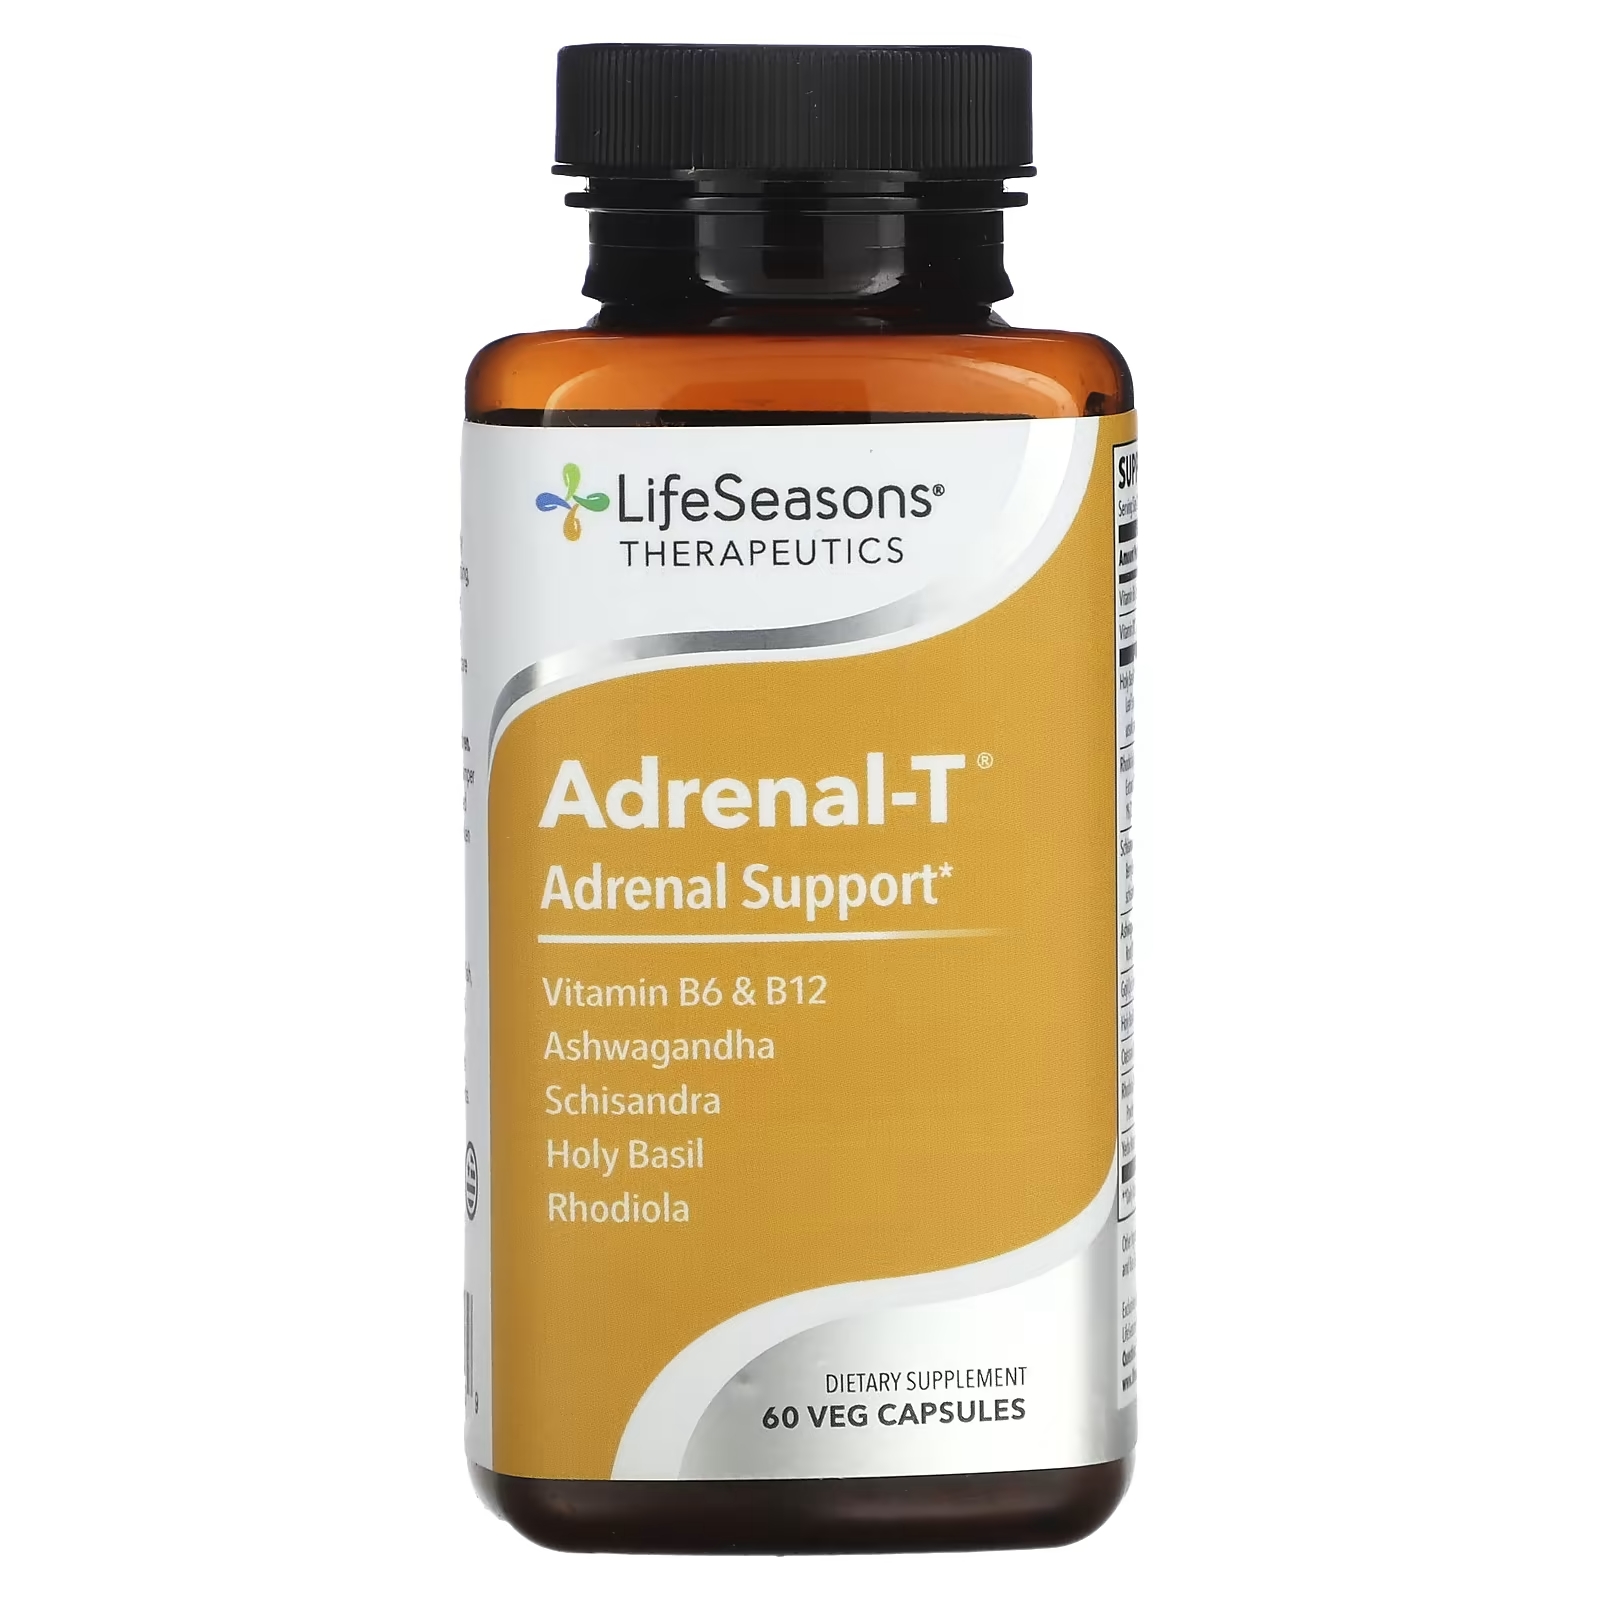 LifeSeasons Adrenal-T адреналиновая поддержка, 60 вегетарианских капсул lifeseasons neuro t поддержка мозга для концентрации внимания 60 вегетарианских капсул